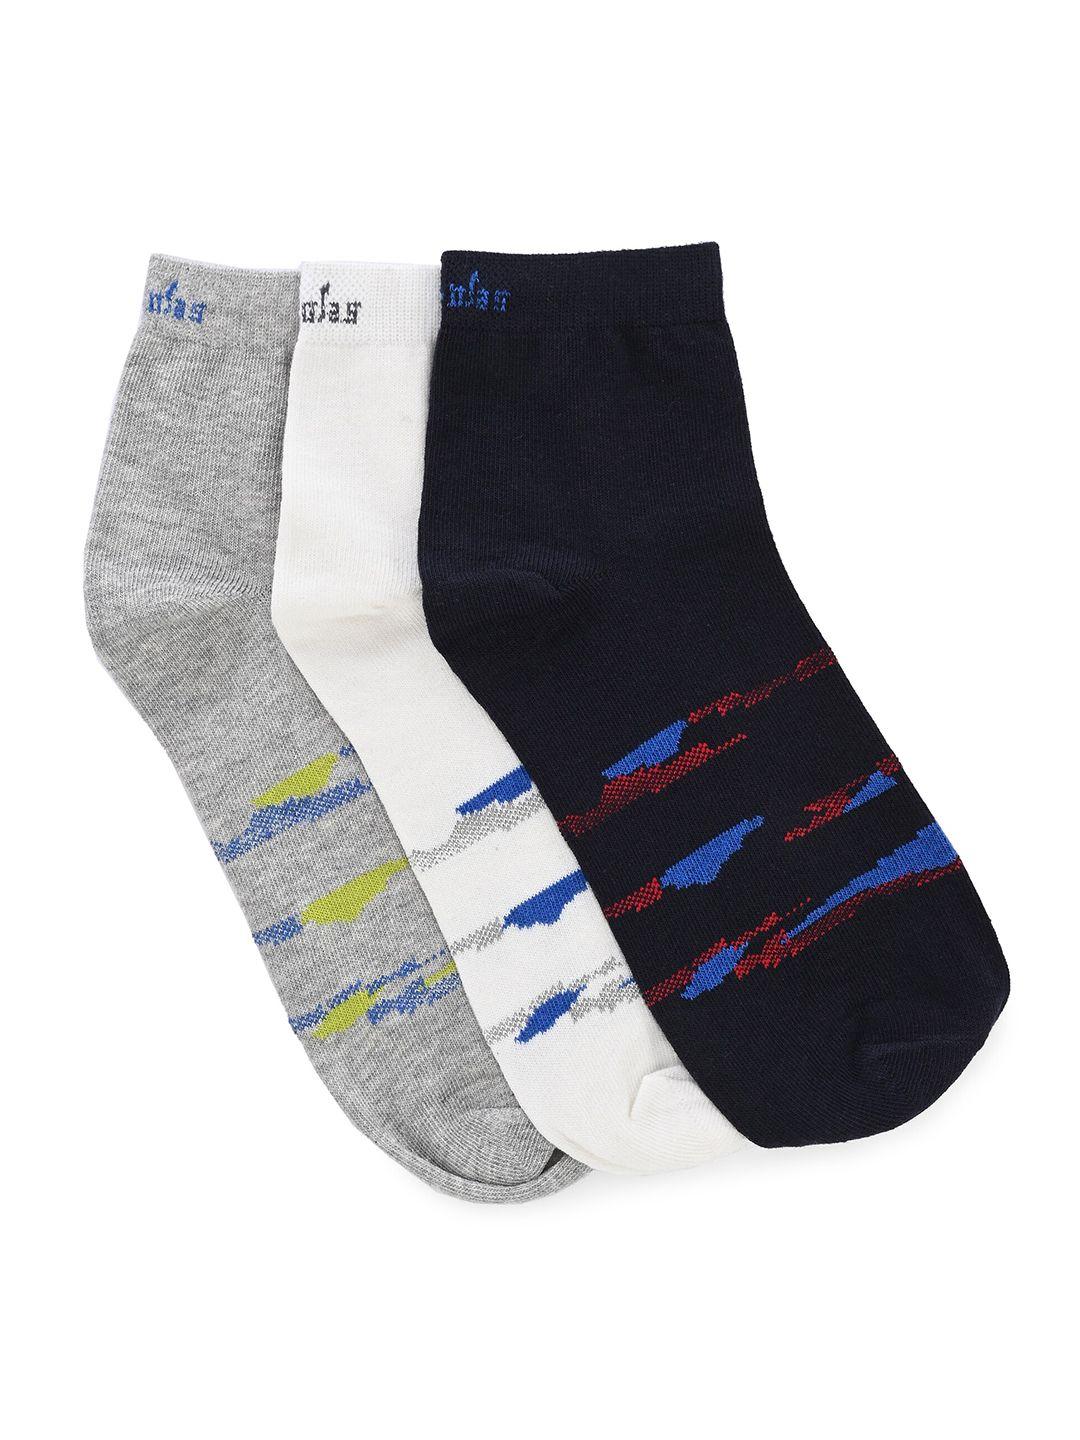 hirolas men pack of 3 patterned ankle-length cotton socks